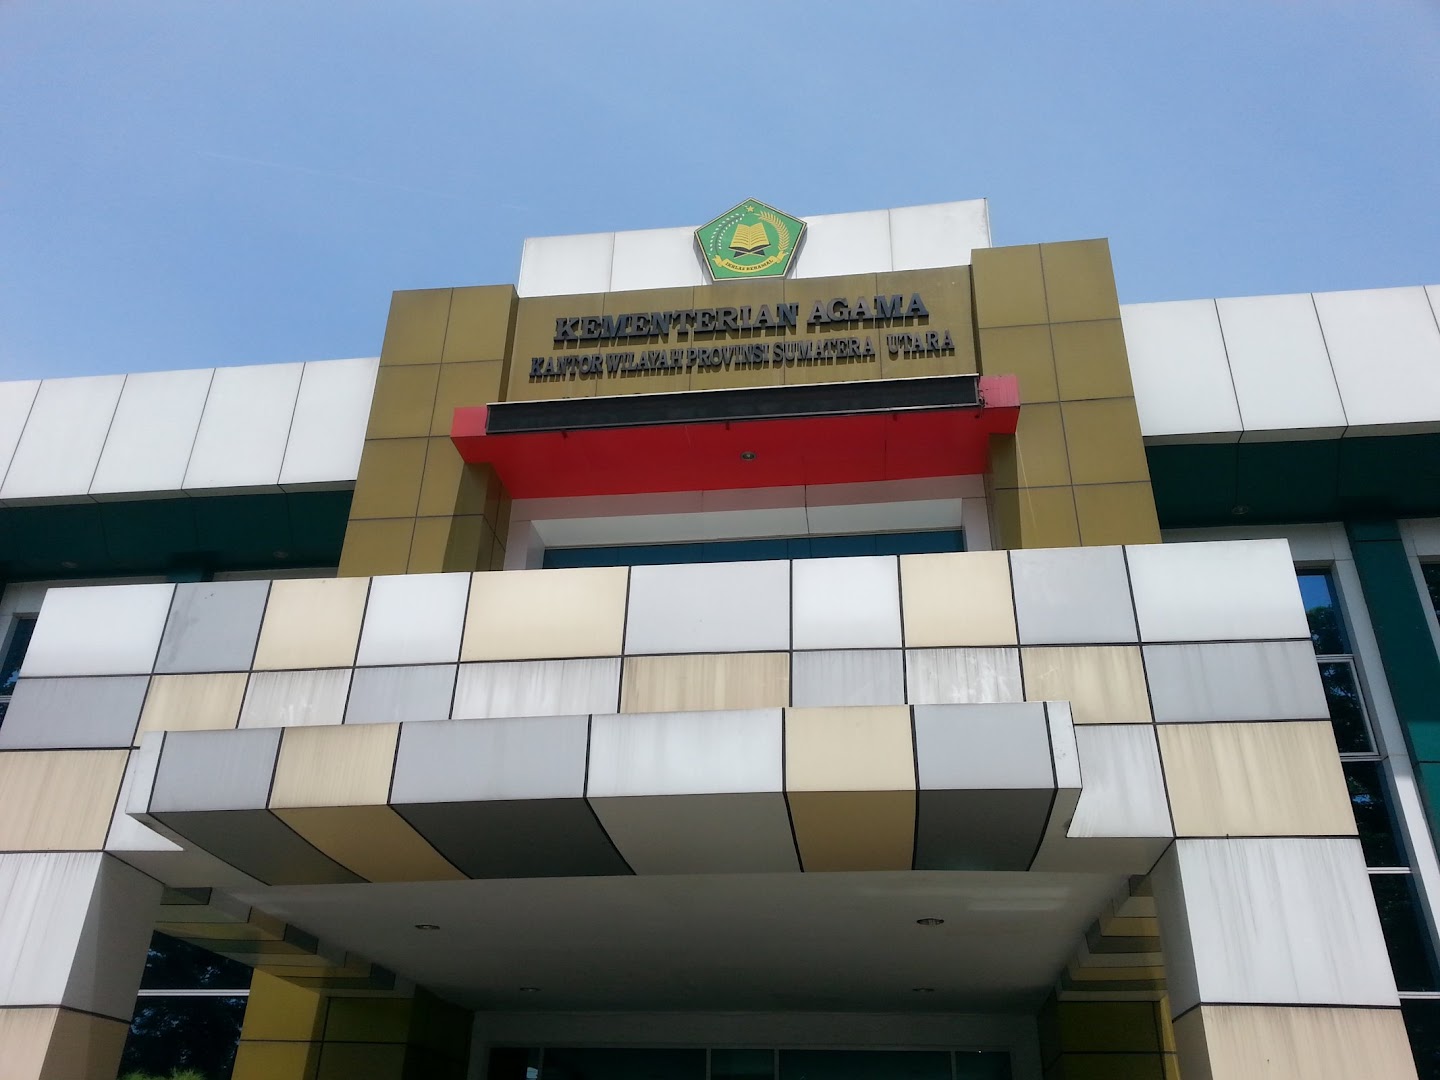 Kantor Wilayah Kementerian Agama Provinsi Sumatera Utara Photo